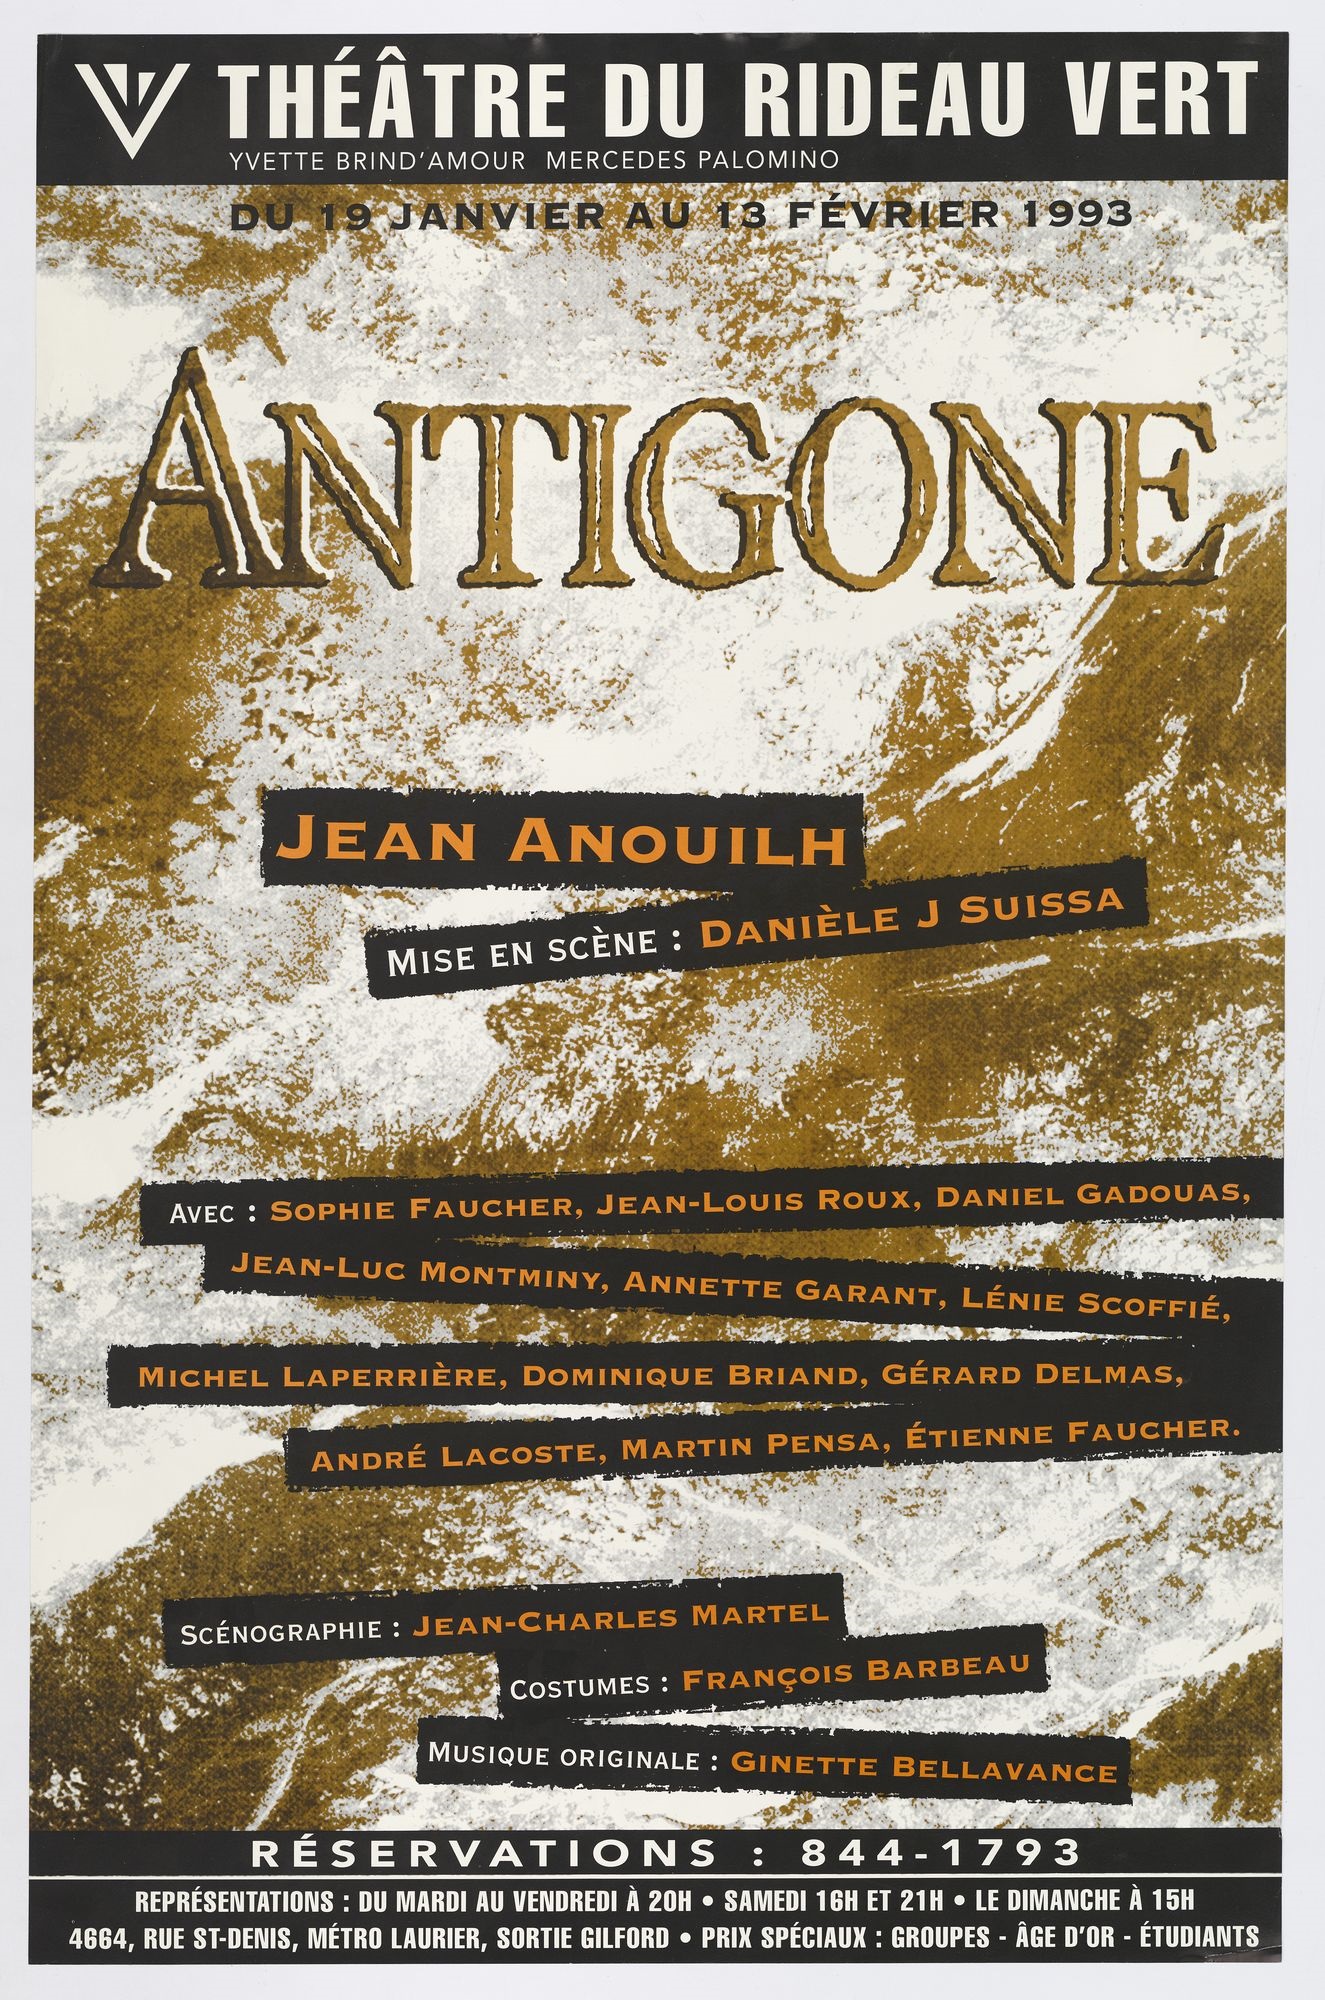 Antigone - Théâtre du Rideau Vert